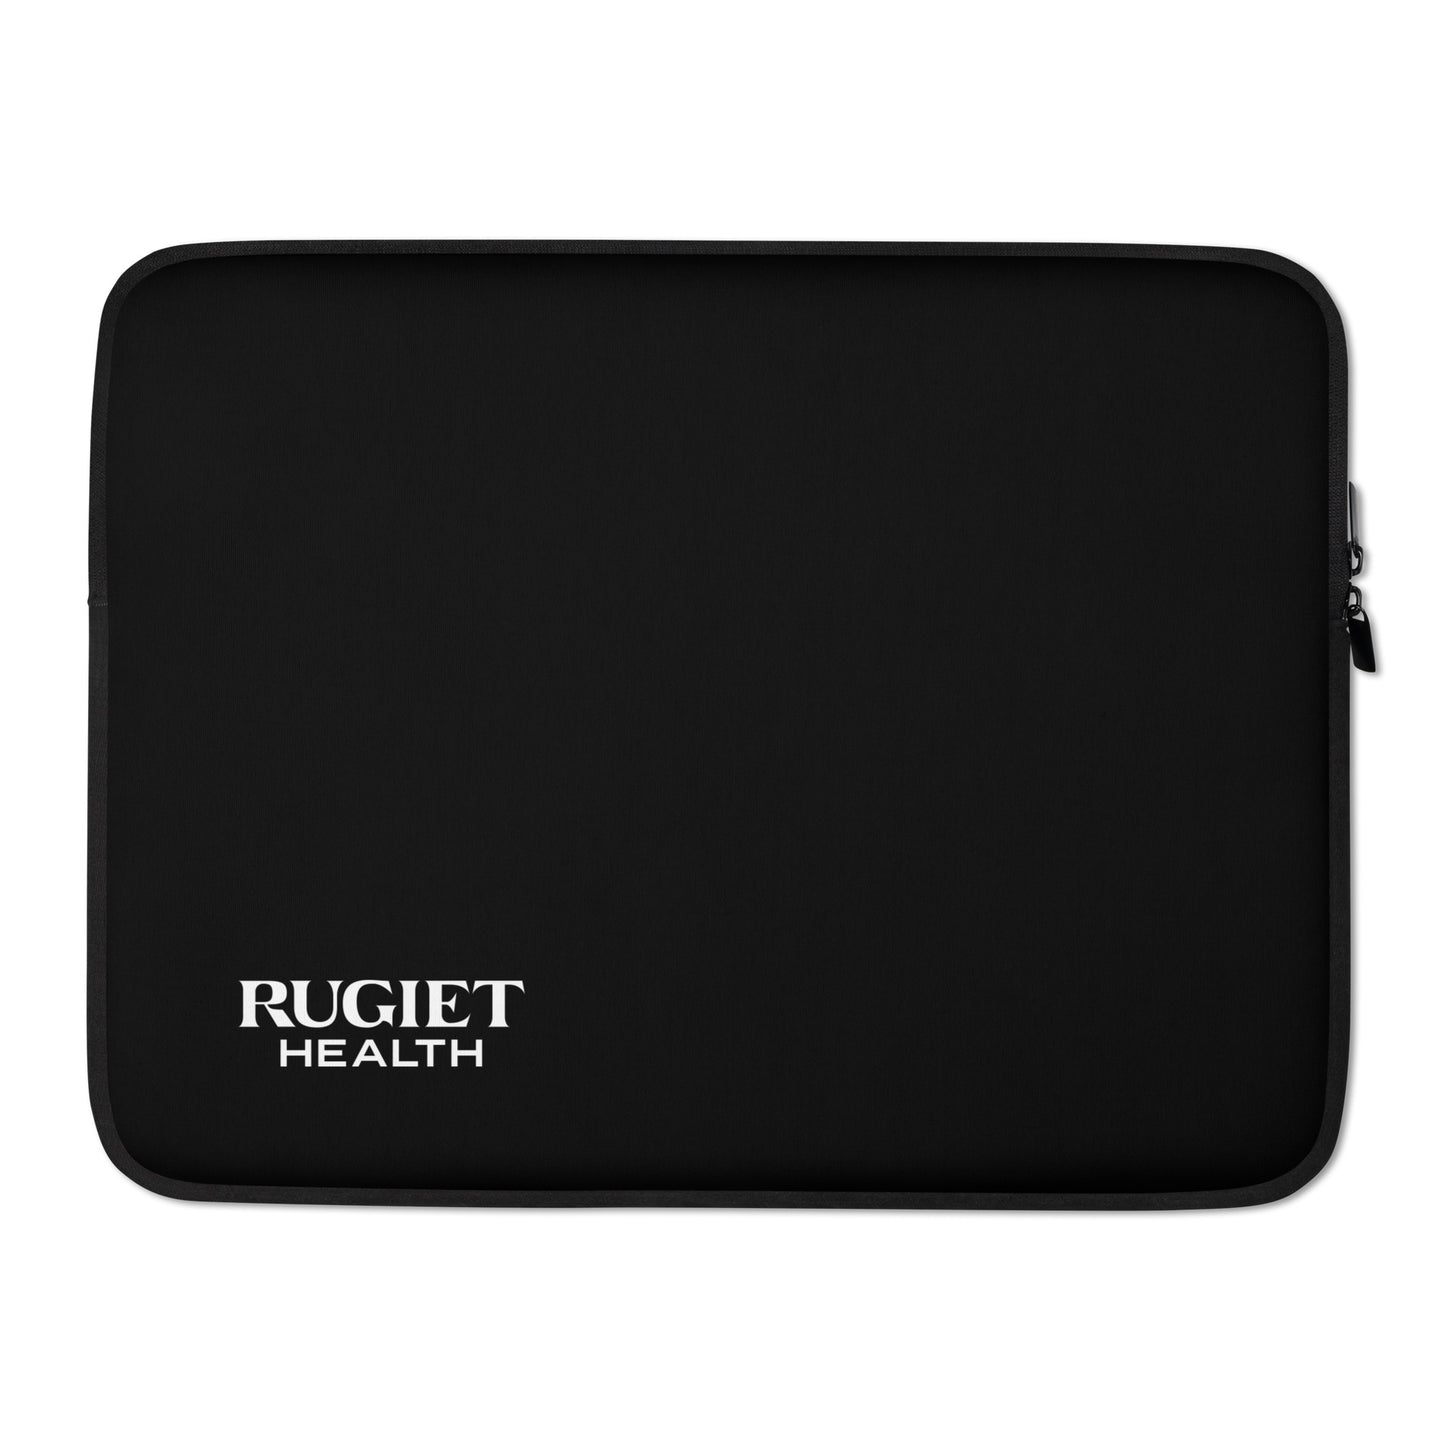 Laptop Sleeve - Rugiet Health